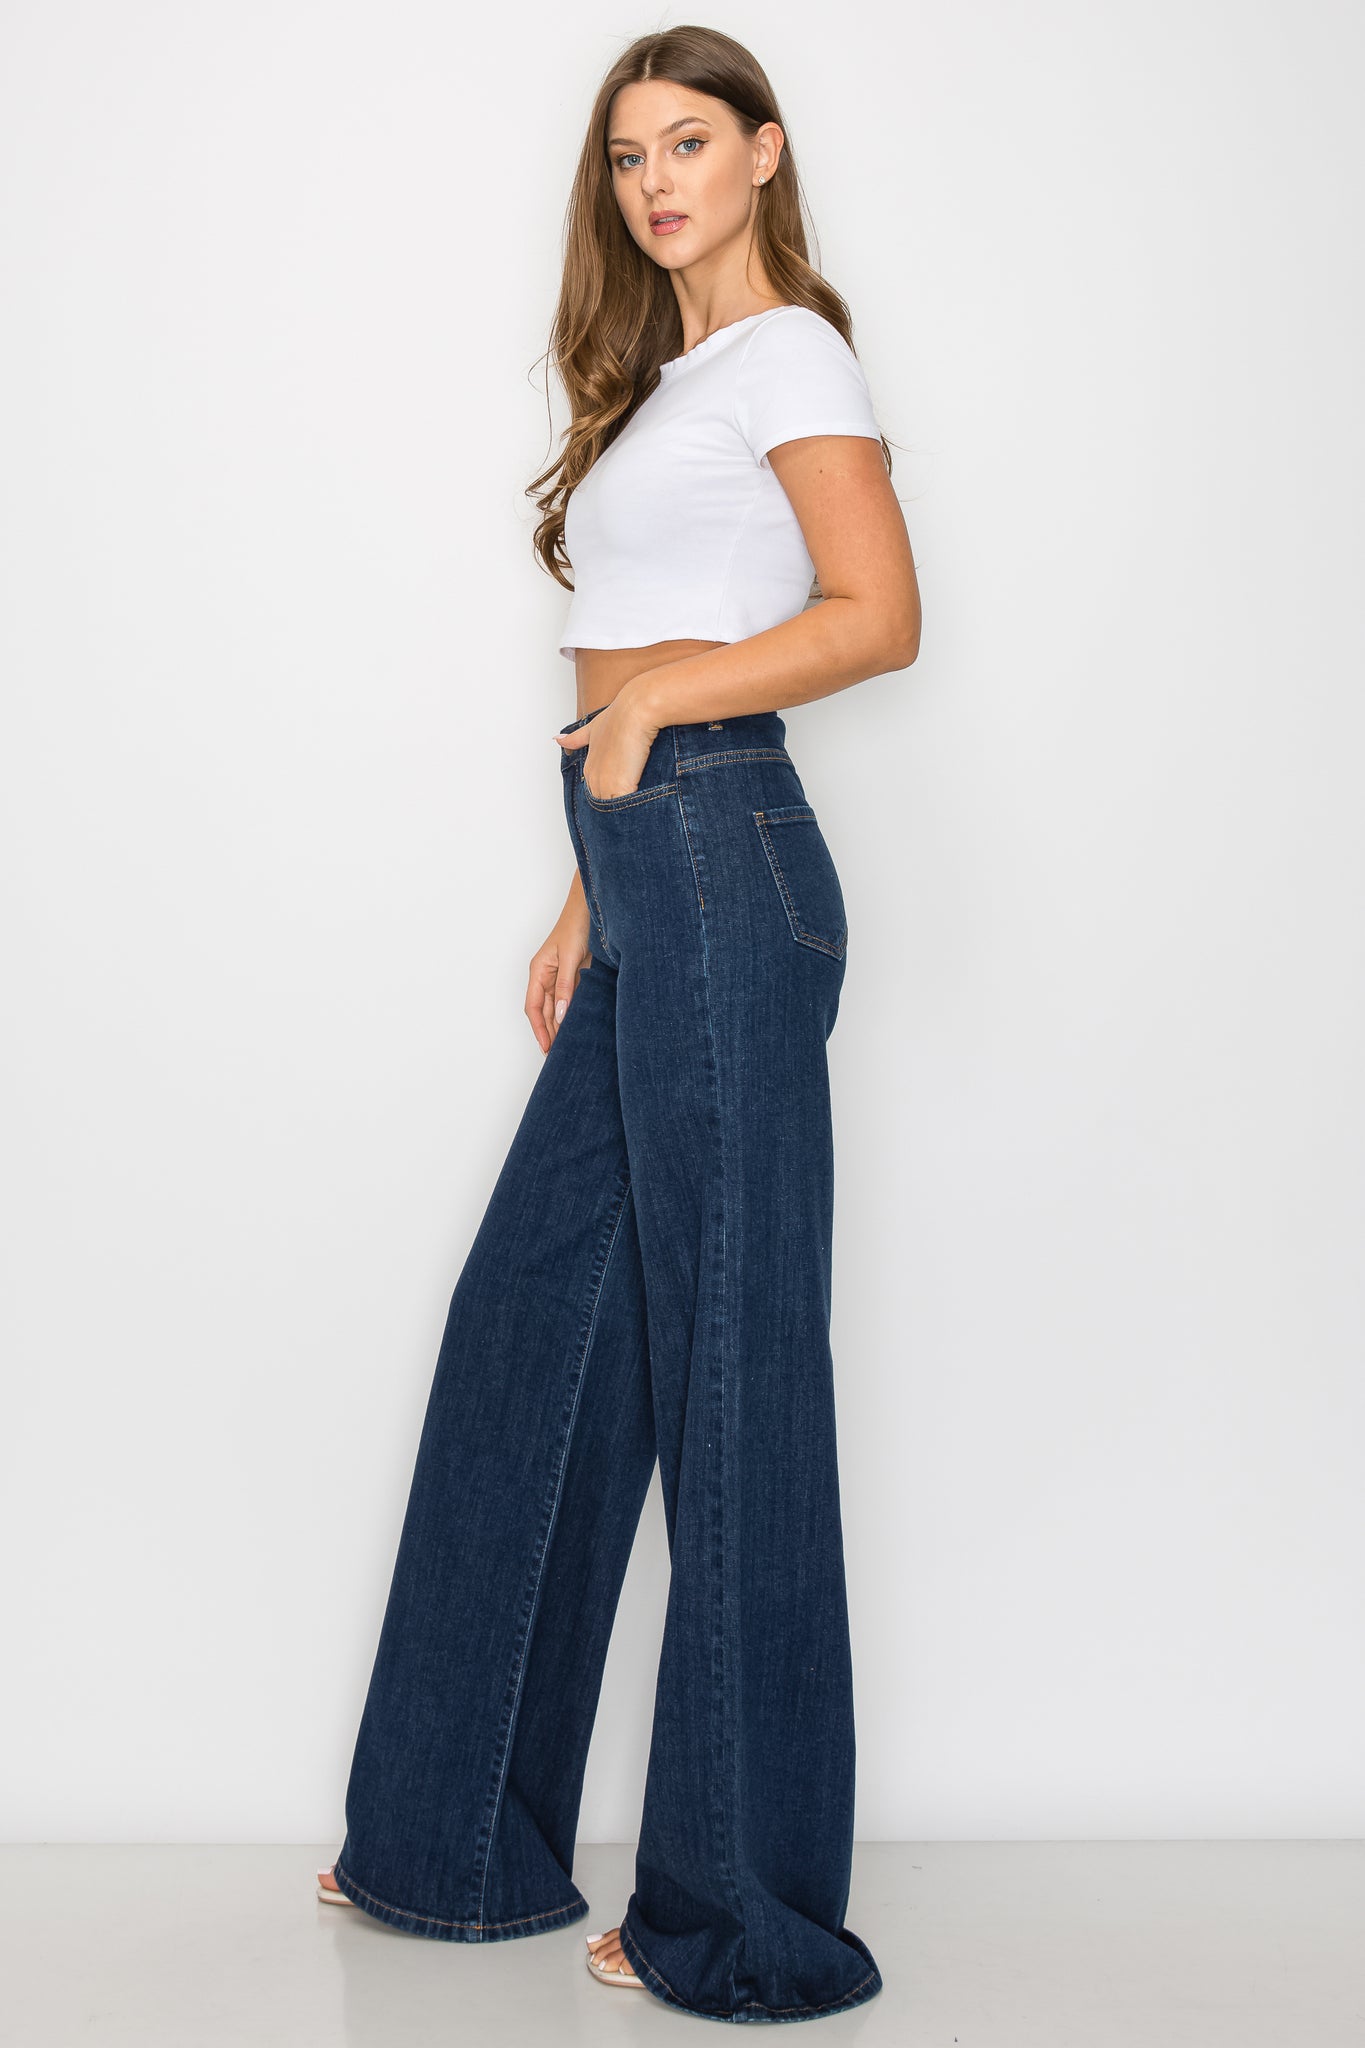 Shop Flare & Wide Leg Jeans For Women